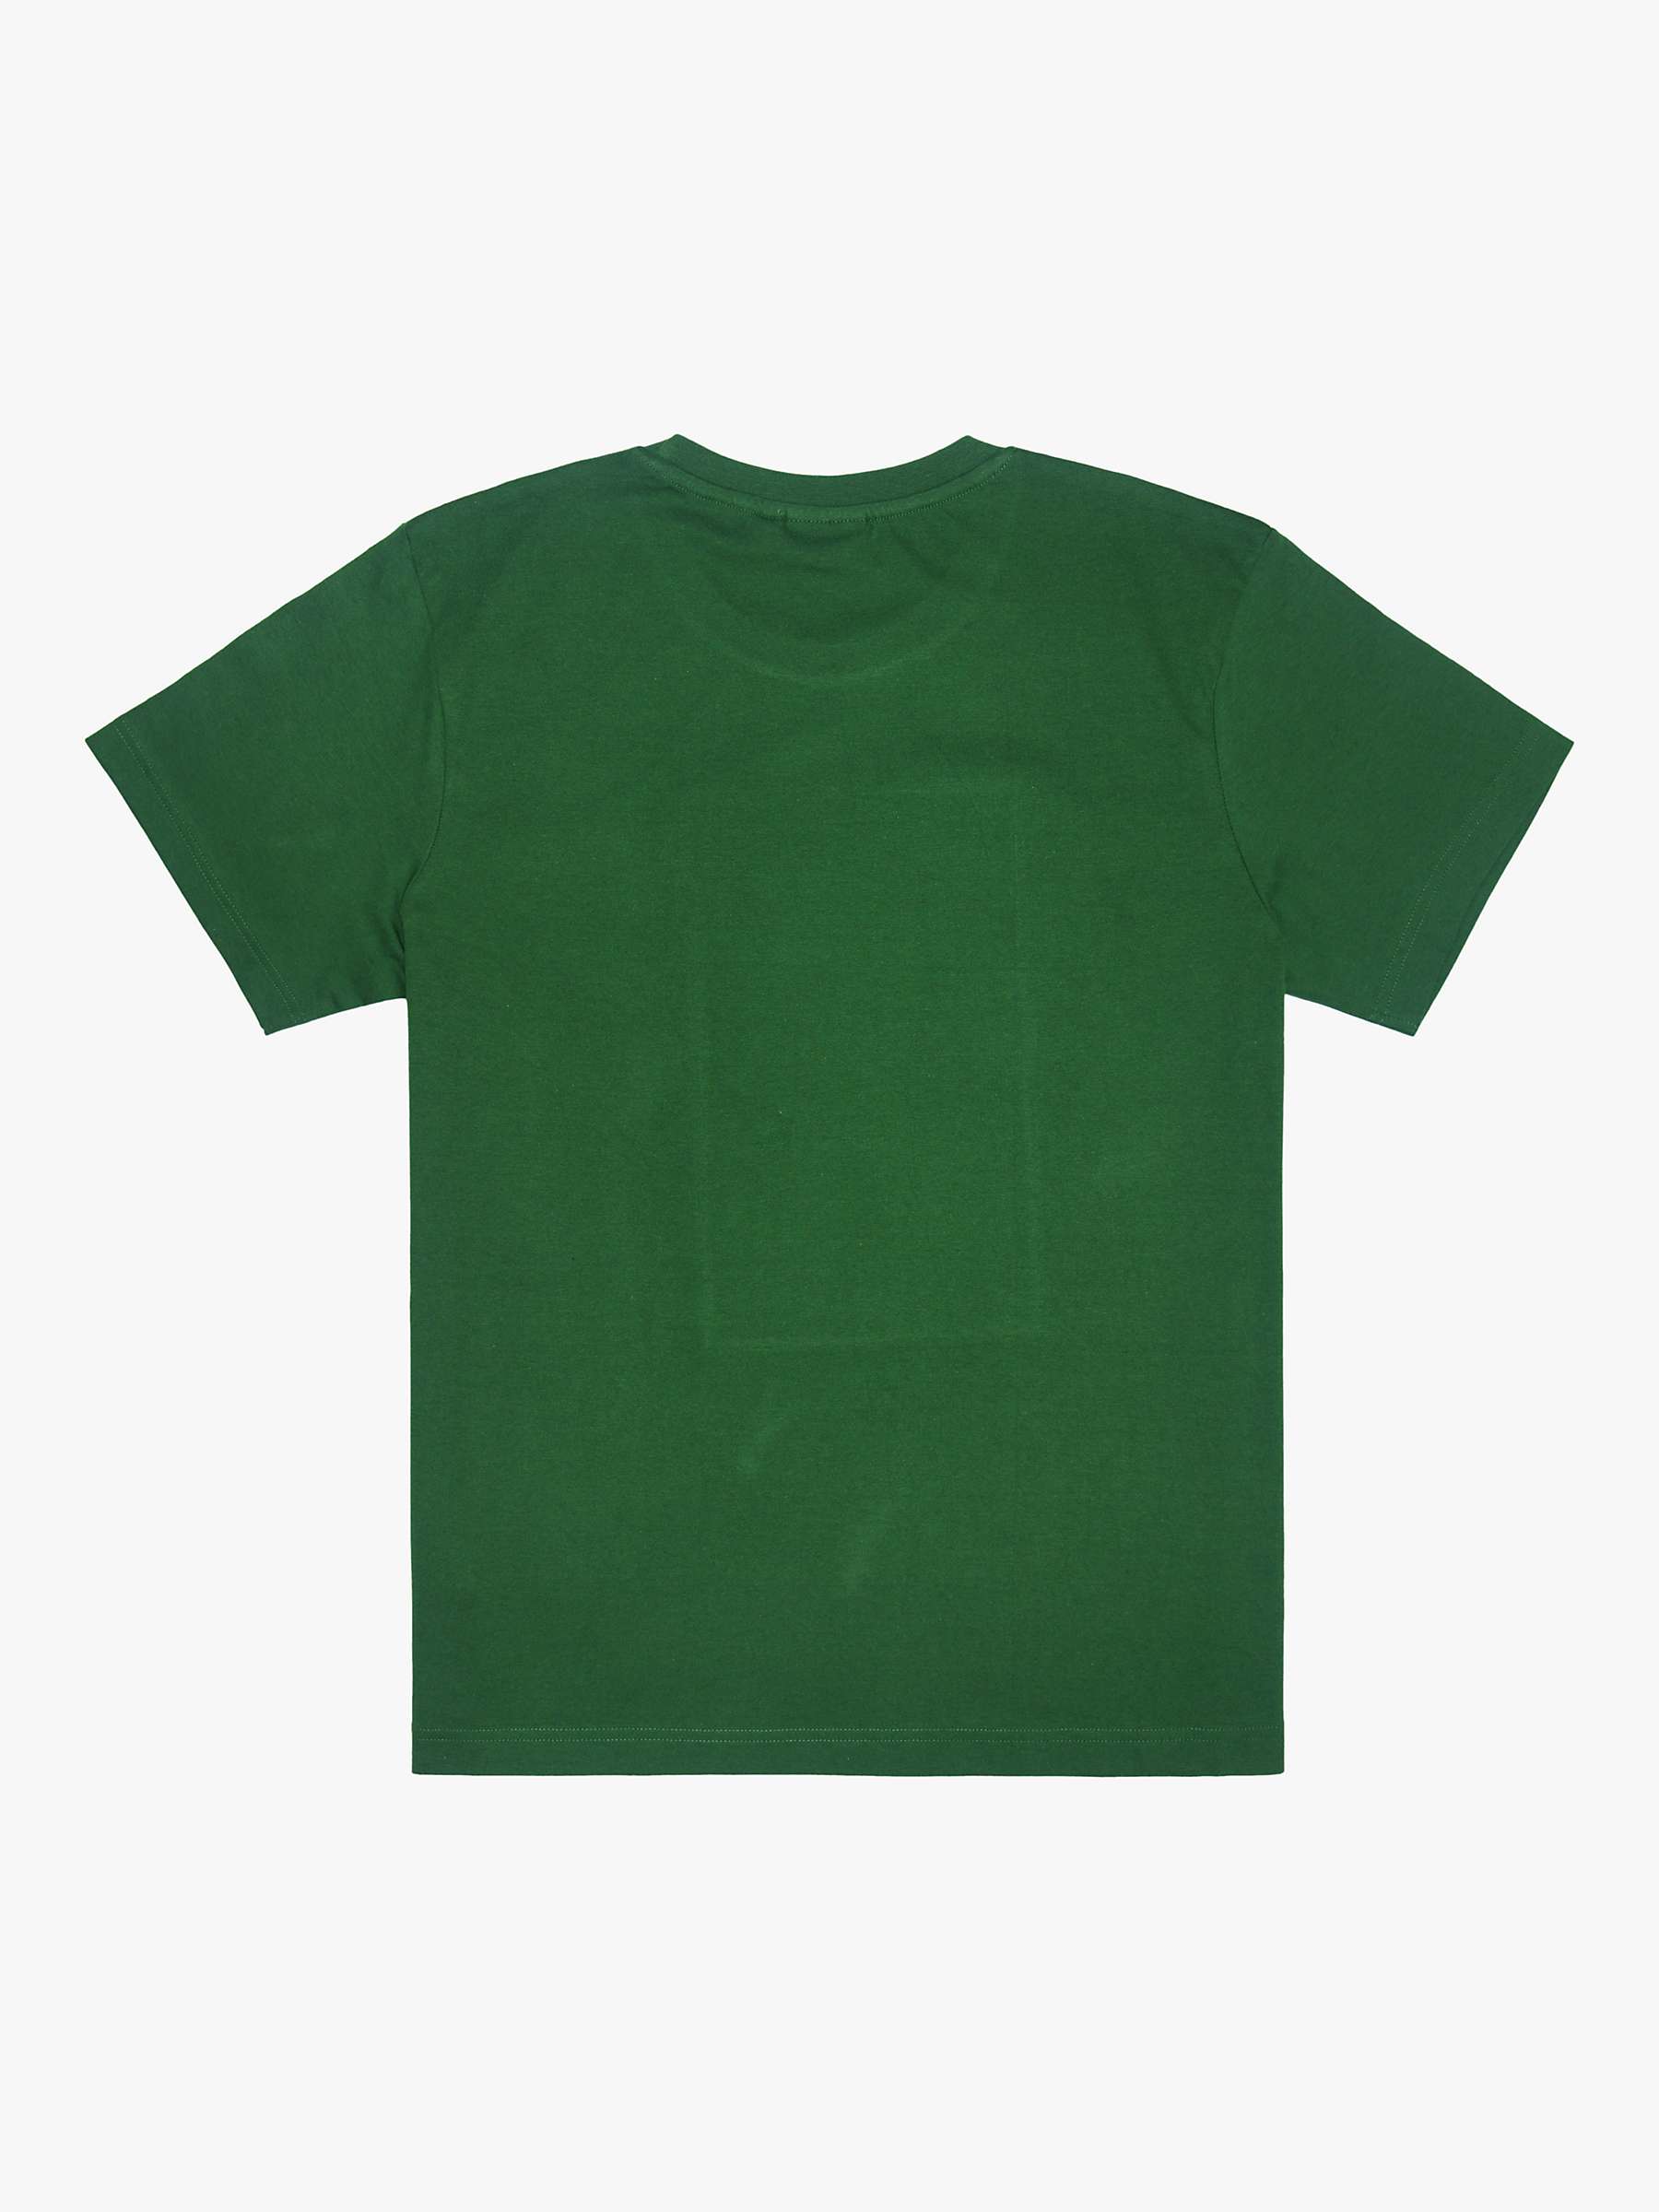 Buy Fabric Flavours Harry Potter Reward T-Shirt, Green Online at johnlewis.com